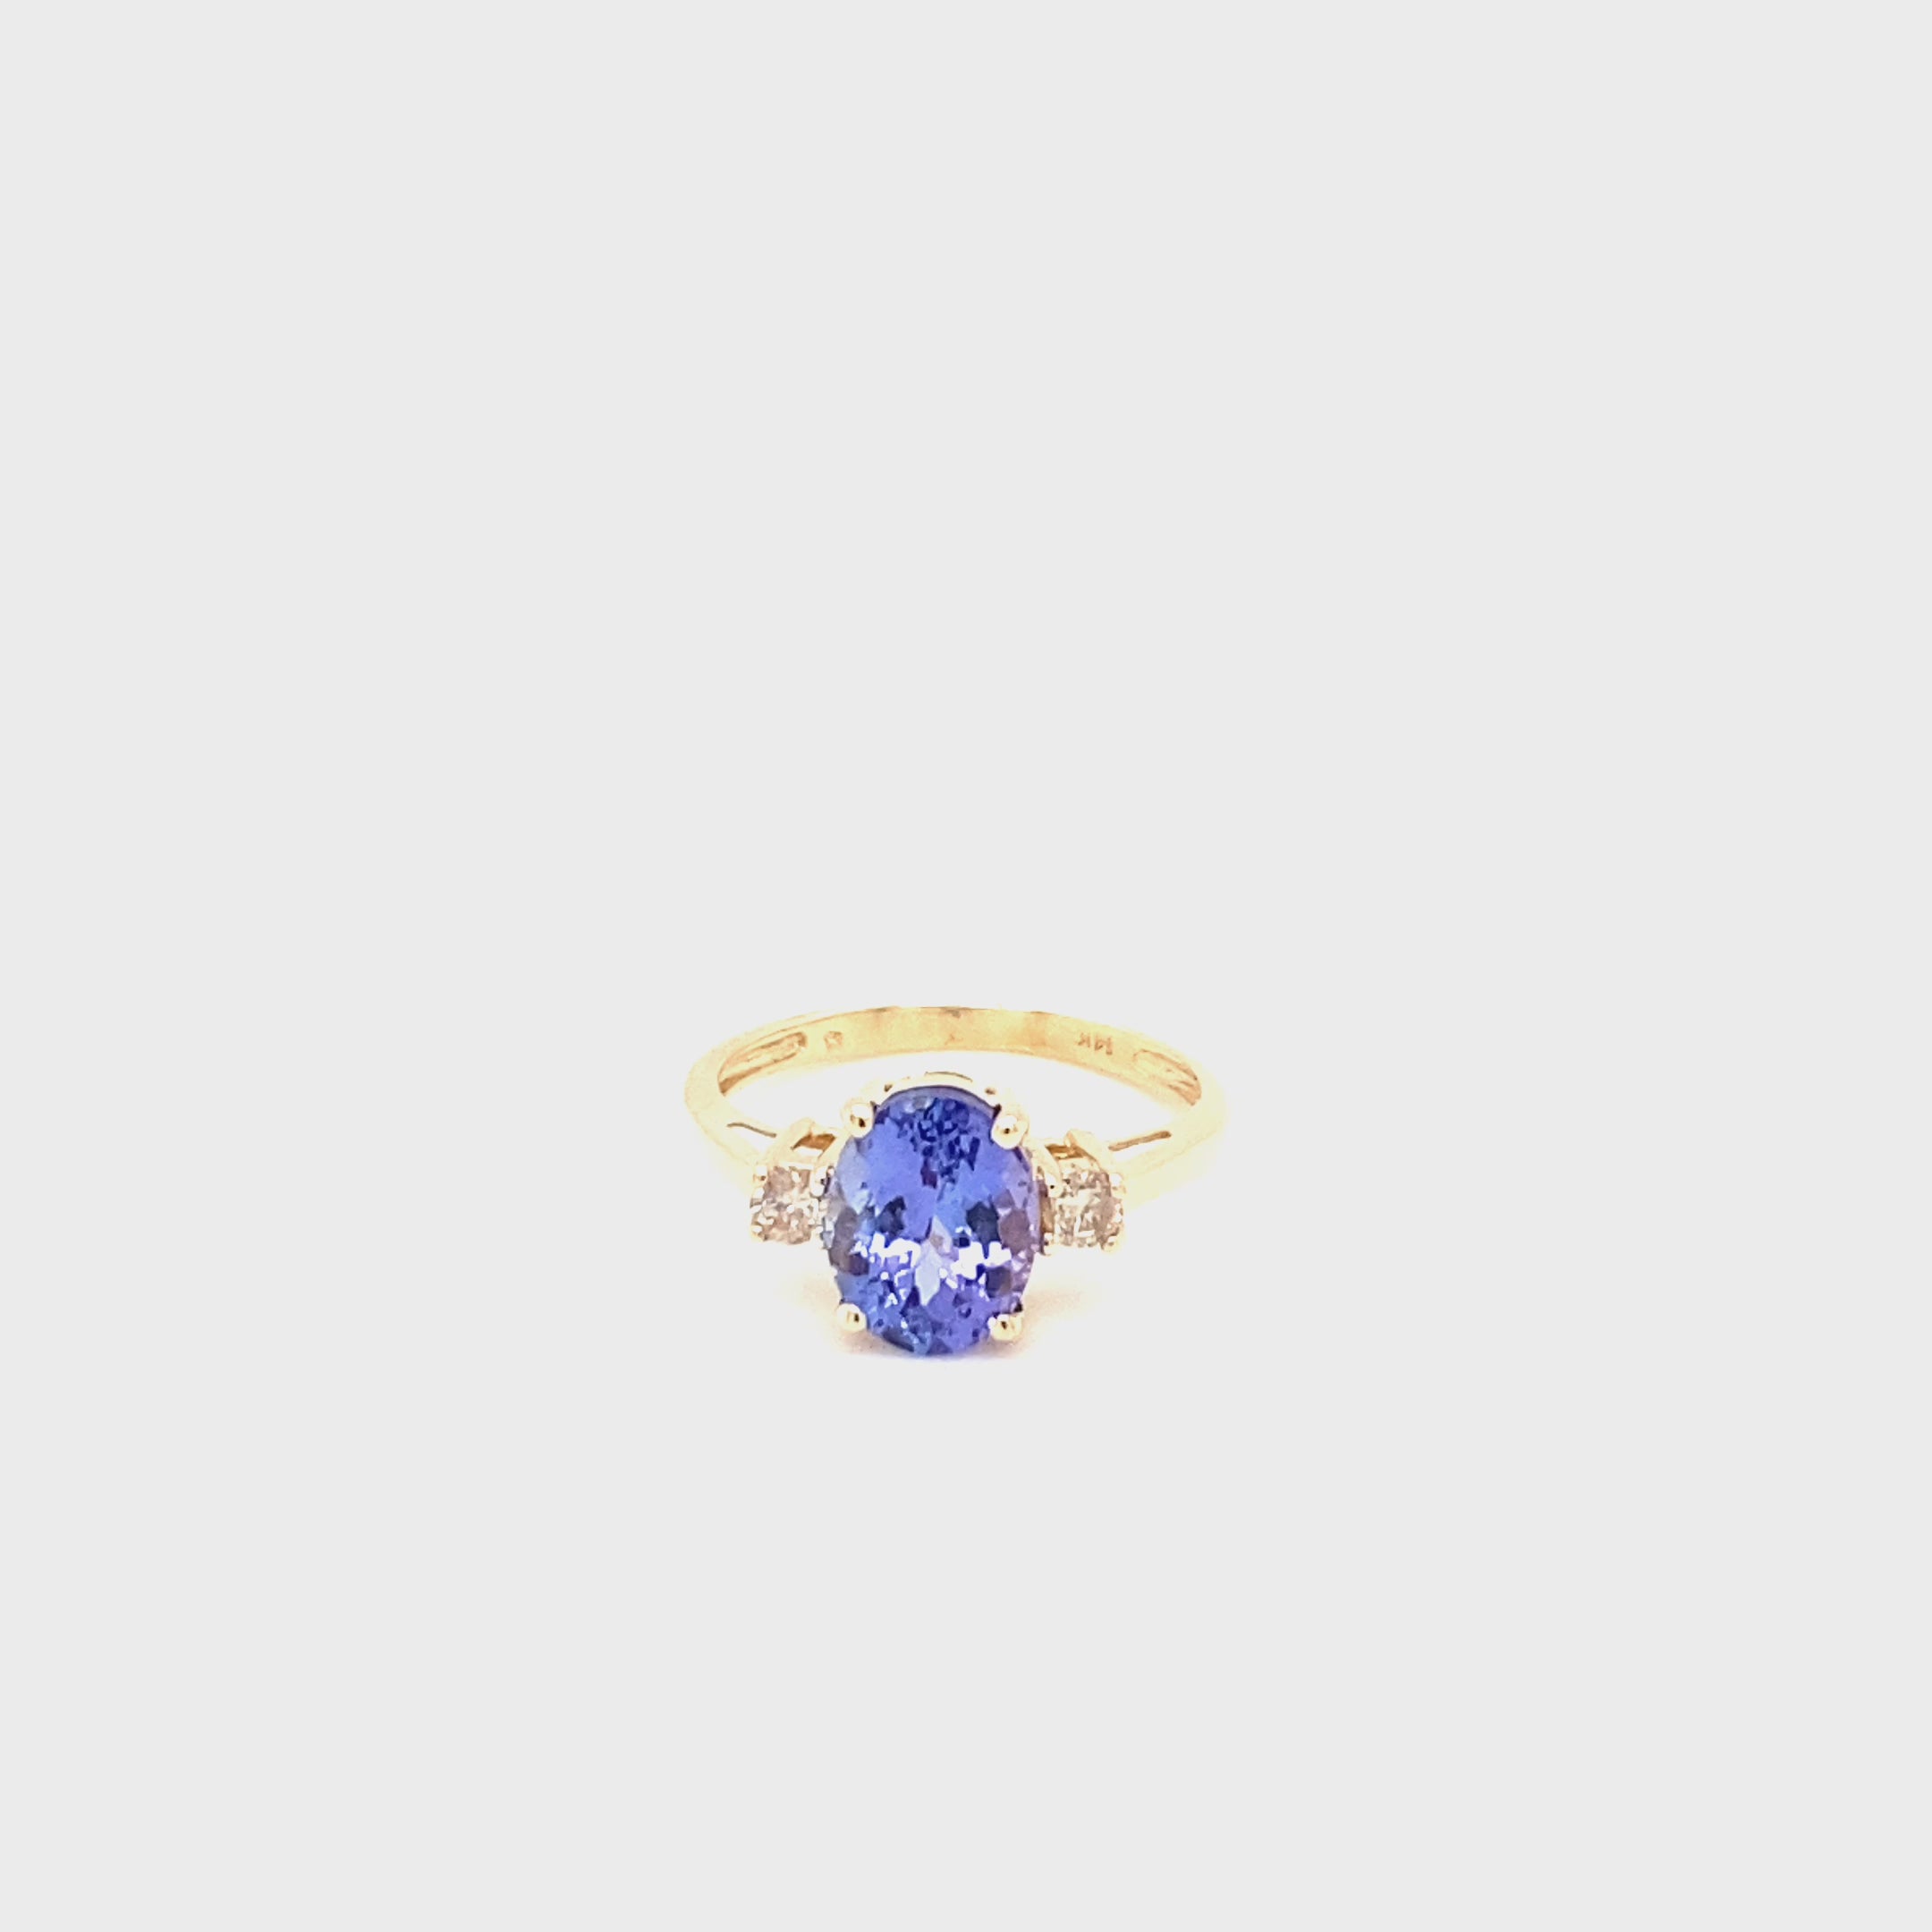 Natural Tanzanite & Diamond Ring 14K Solid Gold 2.78tcw Gemstone Ring Birthstone Ring Engagement Ring Cocktail Ring Estate Jewellery Blue